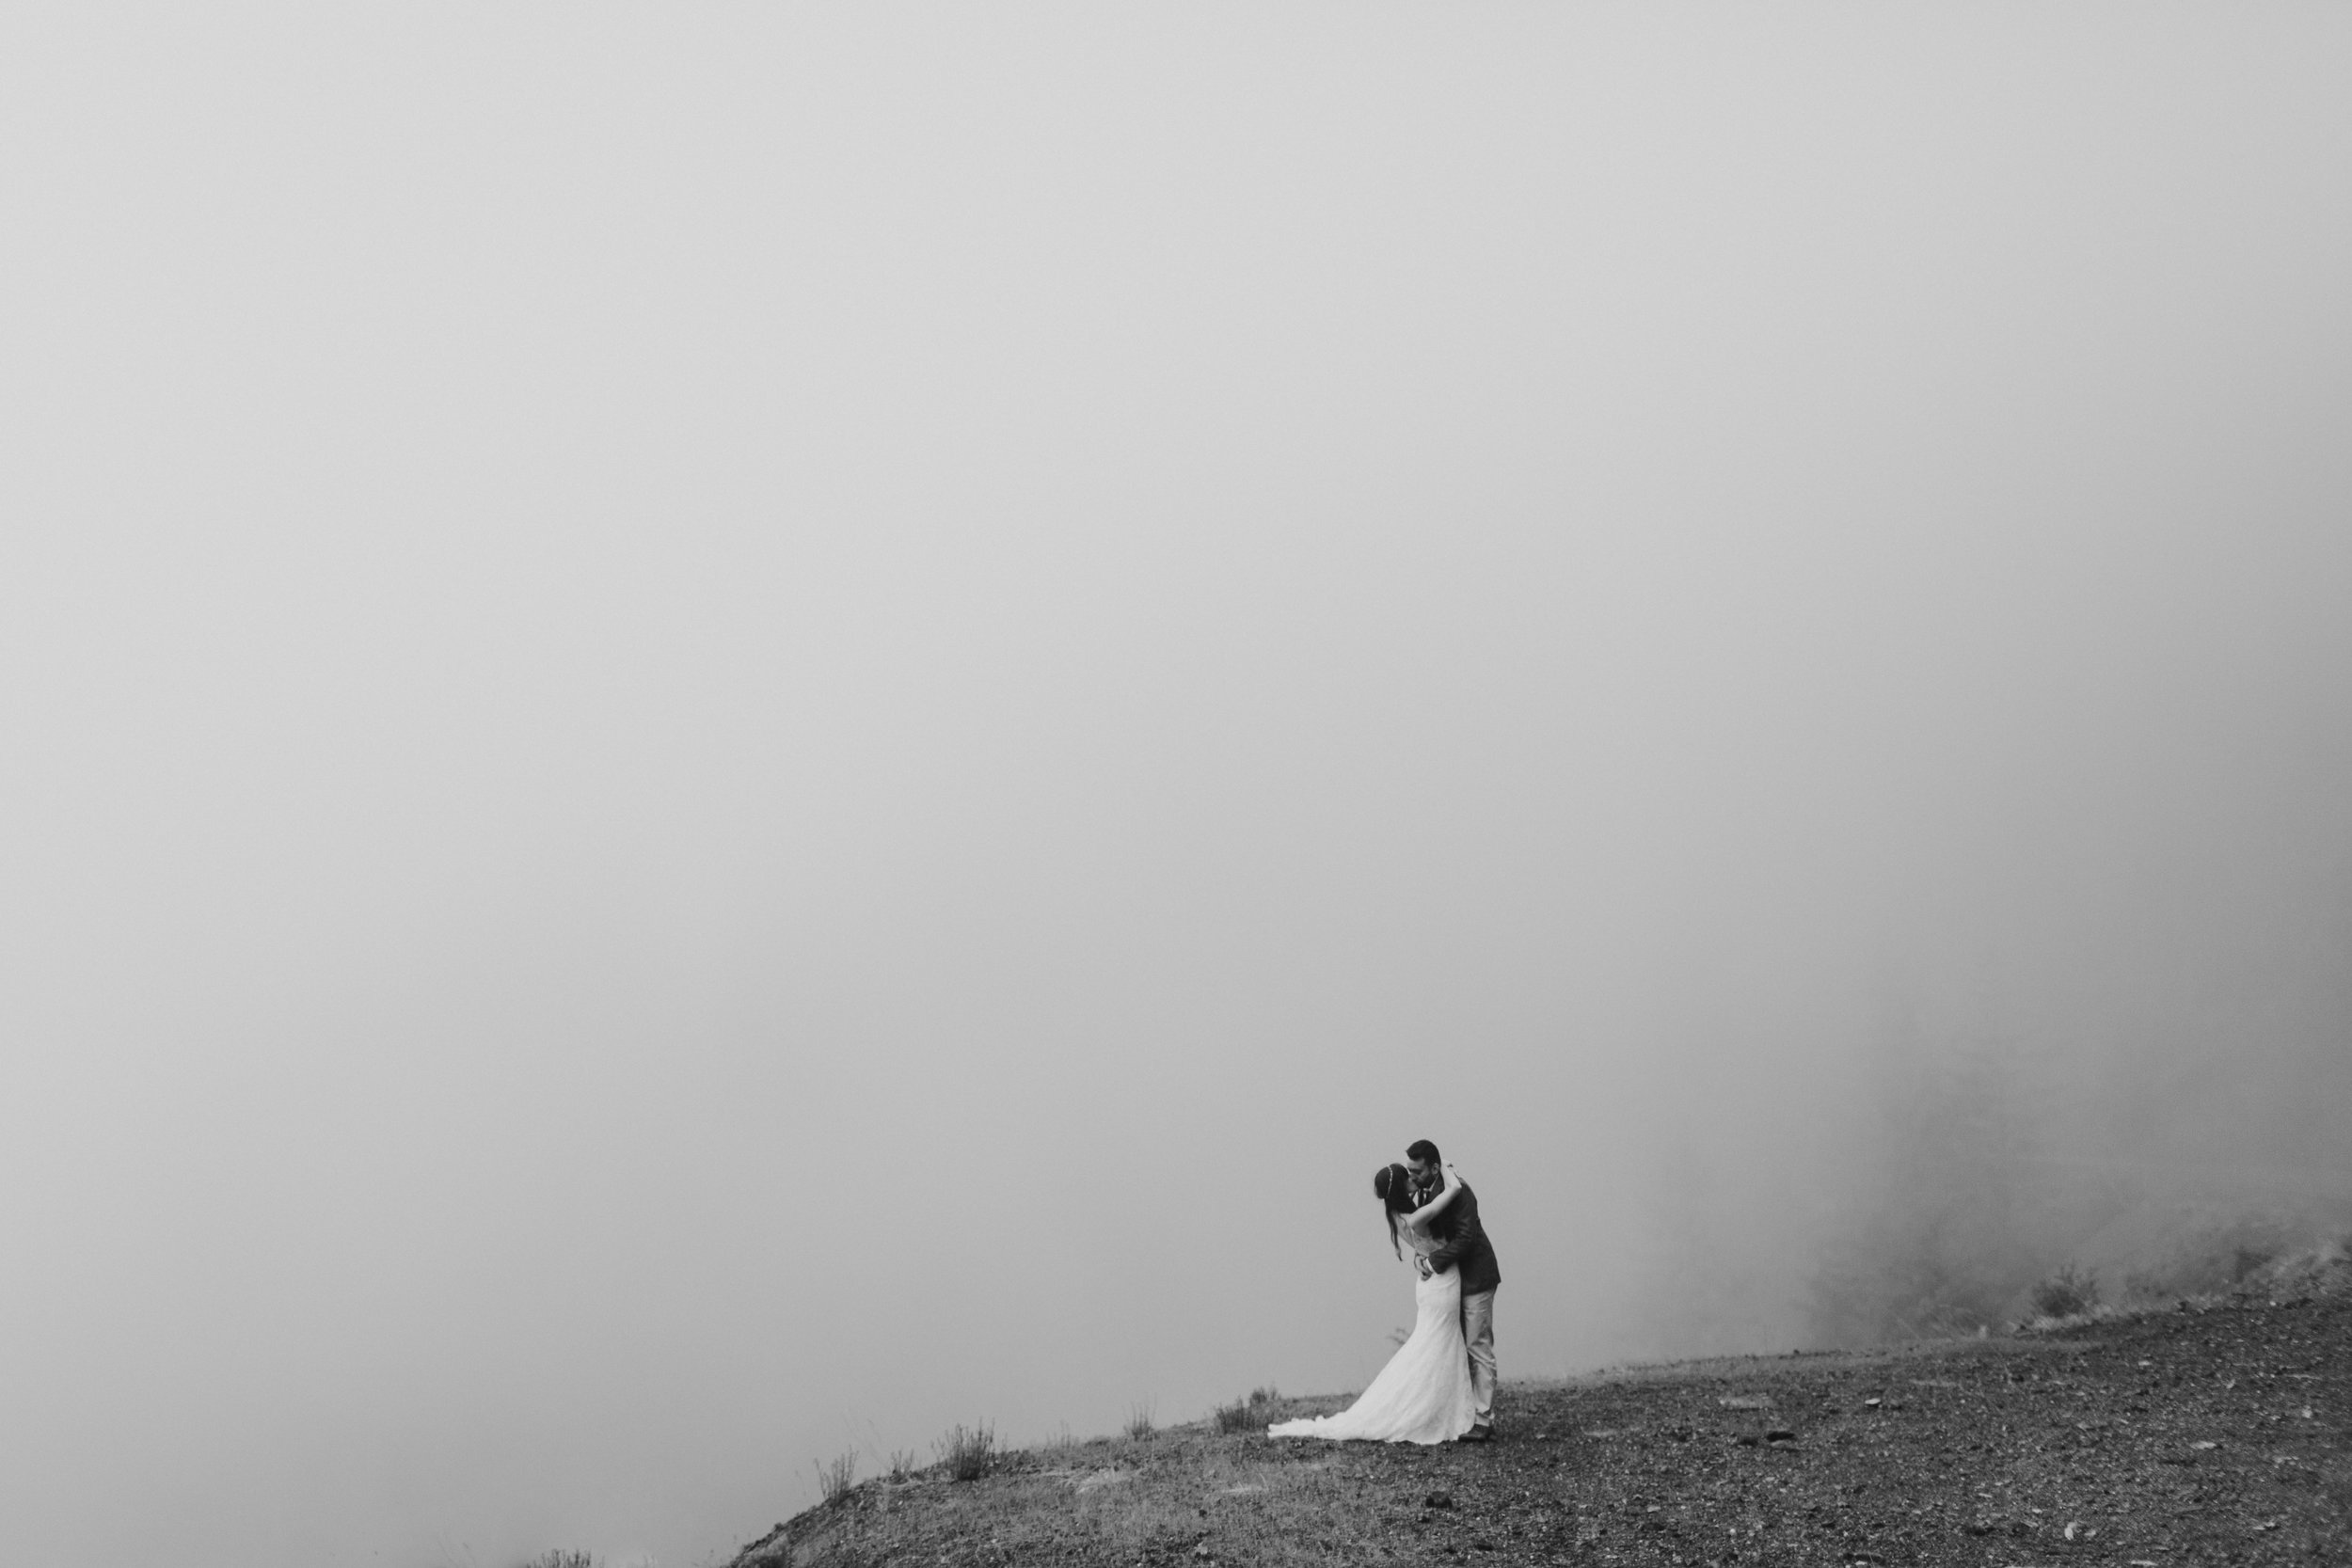 PNW-elopement-wedding-engagement-olympic national park-port angeles-hurricane ridge-lake crescent-kayla dawn photography- photographer-photography-kayladawnphoto-217.jpg